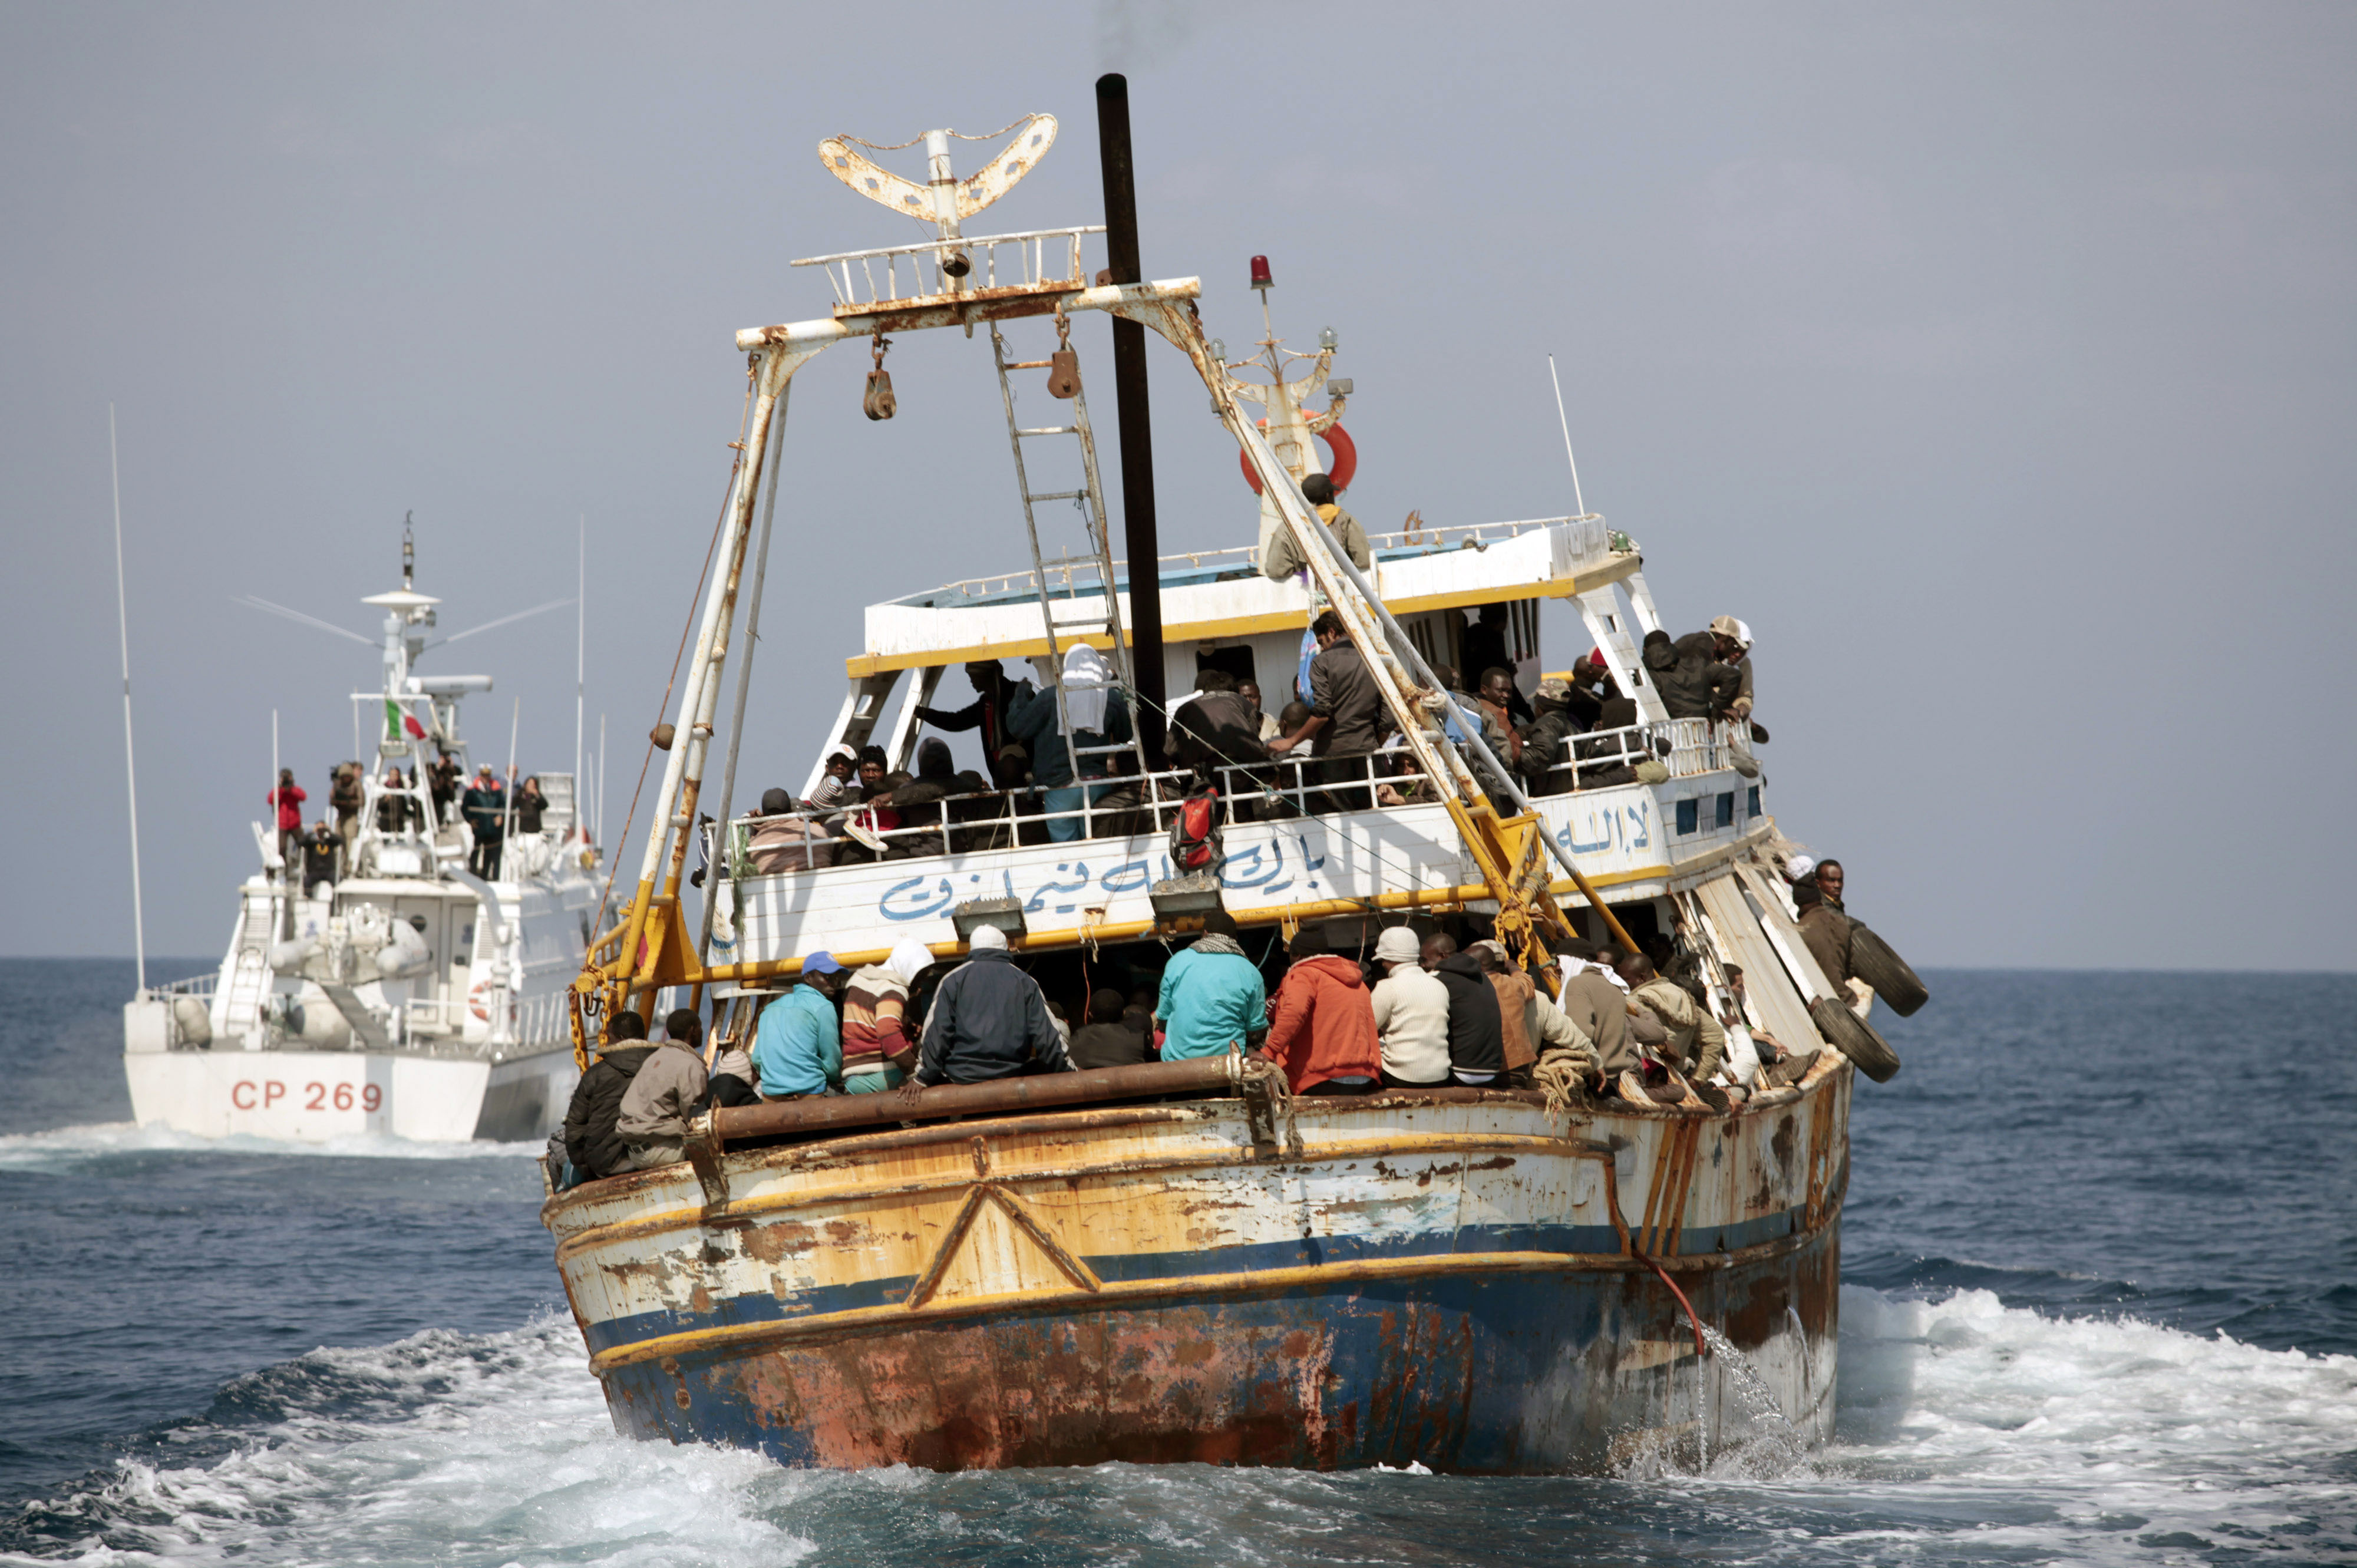 Invandring, Cecilia Malmström, Medelhavet, Frankrike, Tunisien, Schengen, Uppror, Libyen, Revolution, Egypten, Nordafrika, EU, Italien, Migration